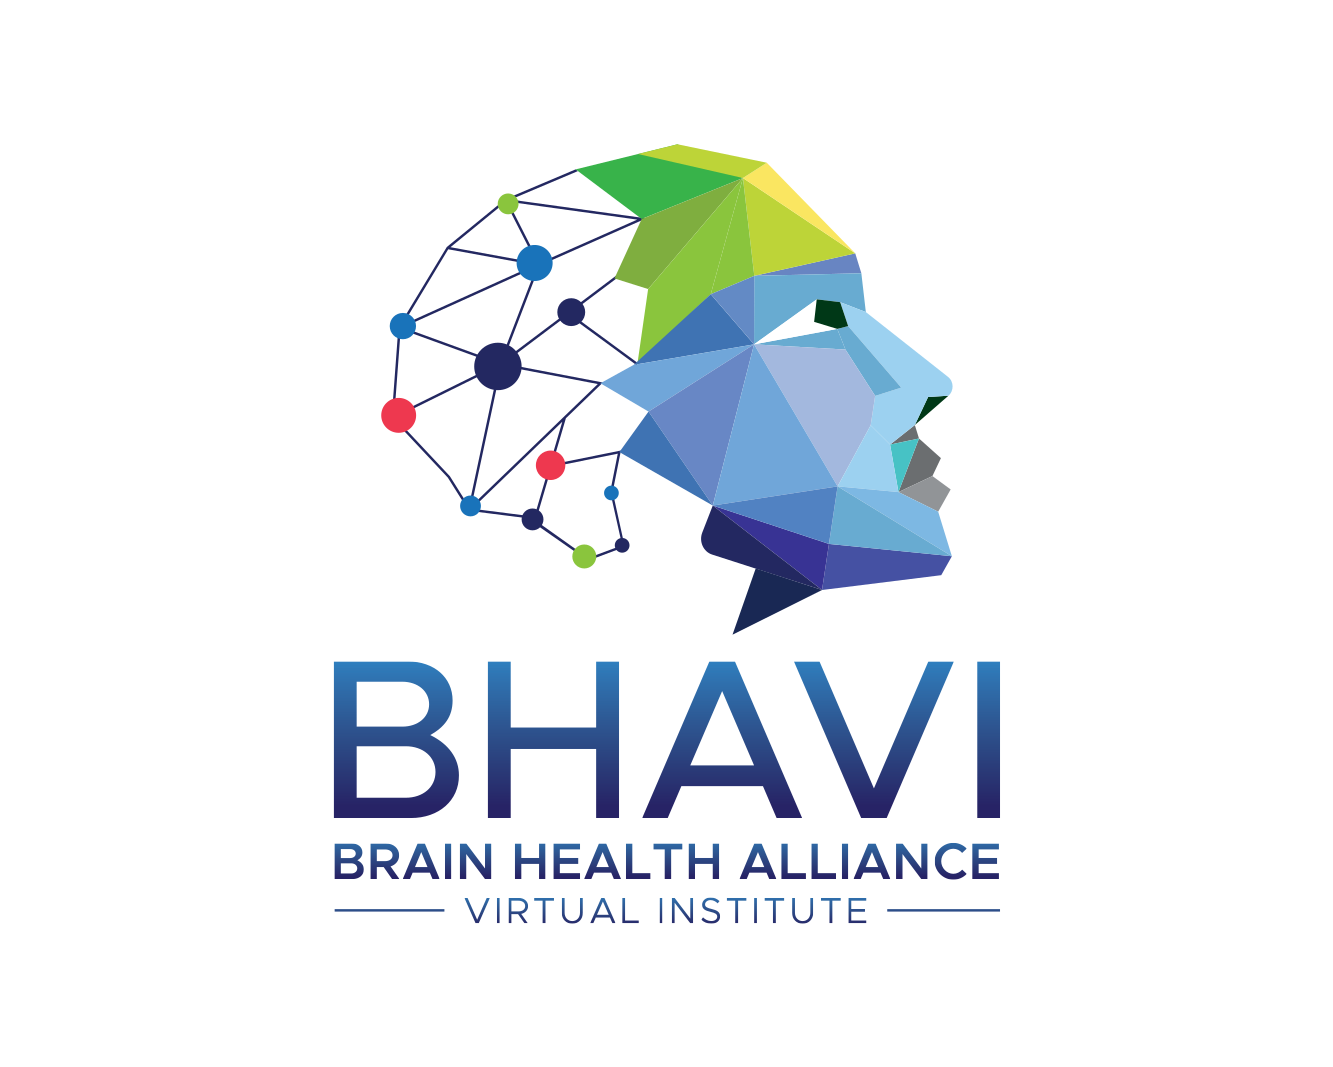 Brain Health Alliance Virtual Institute Logo Image